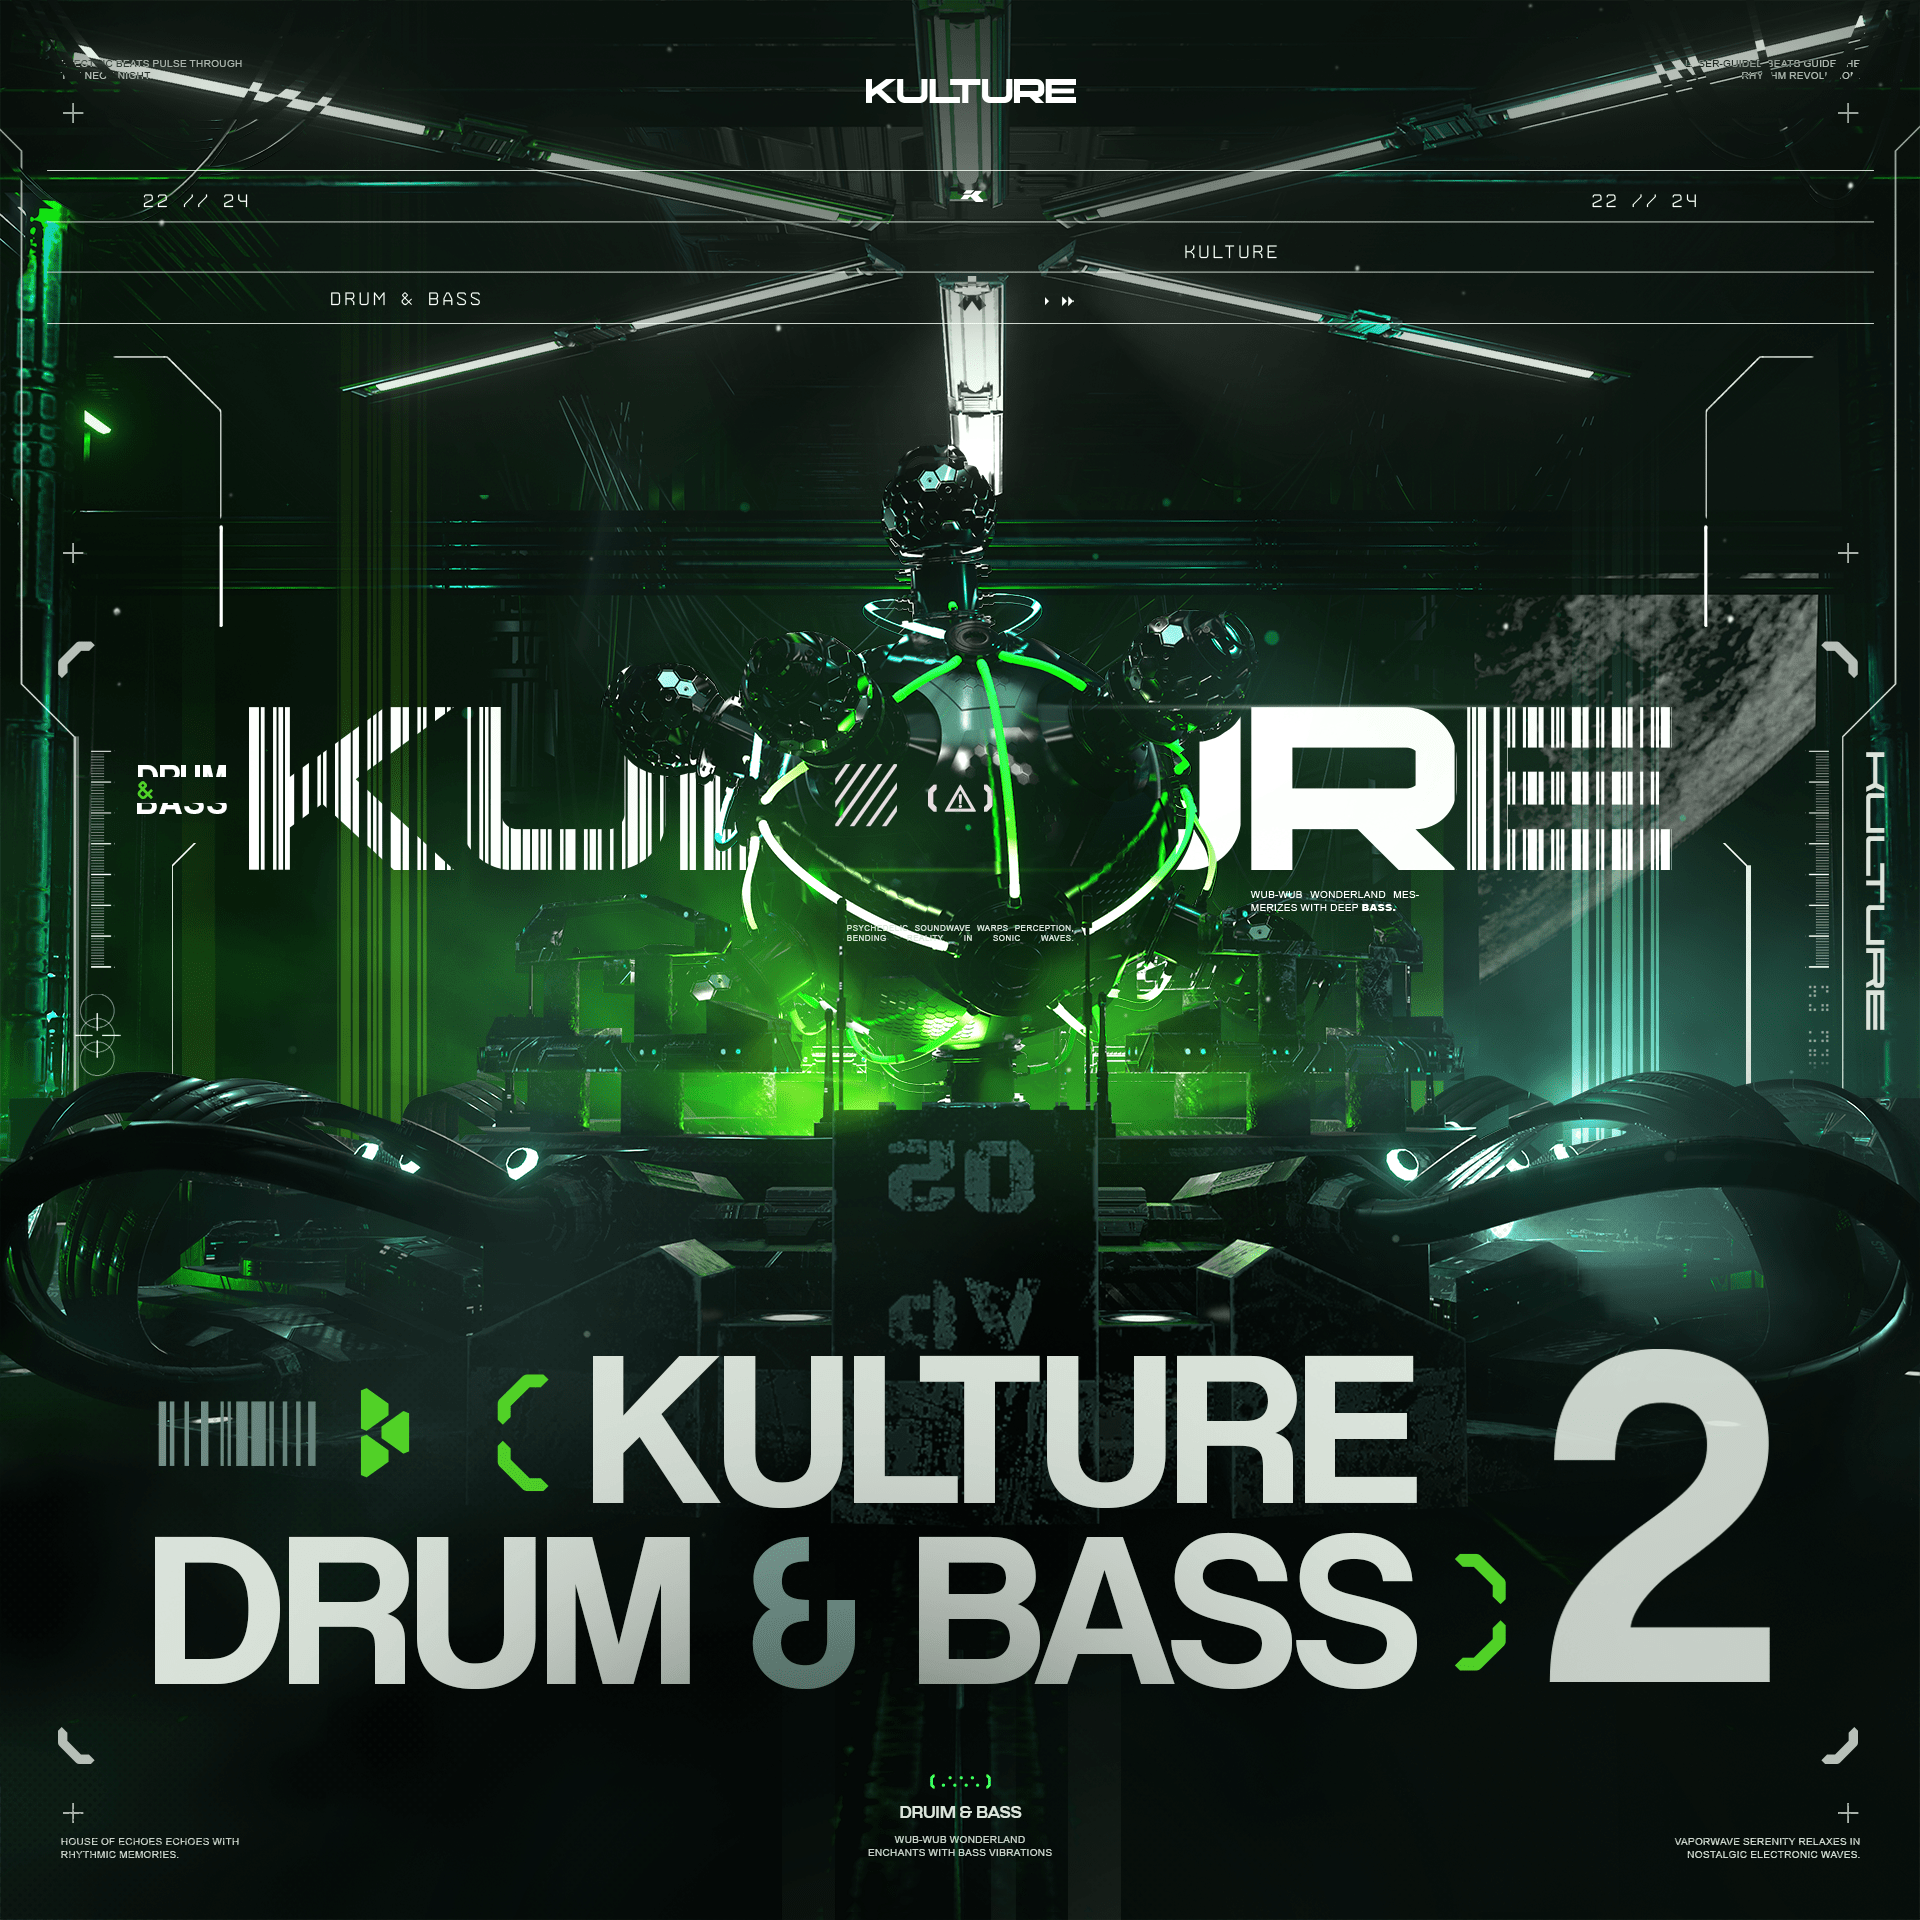 Drum & Bass (Vol. 2)